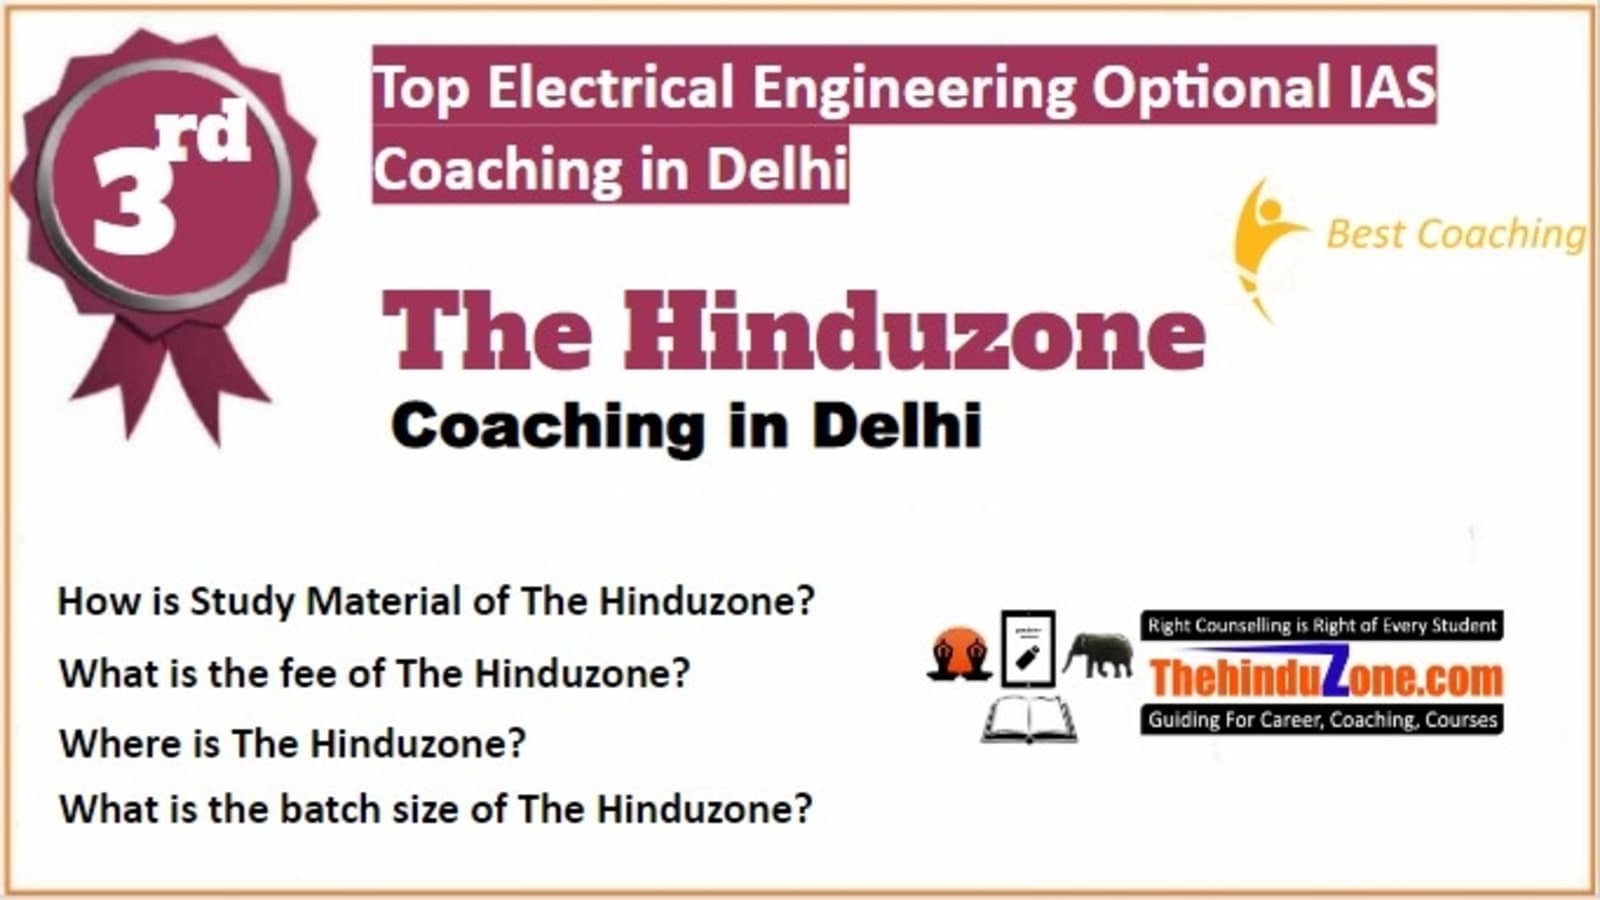 Rank 3 Best Electrical Engineering Optional IAS Coaching in Delhi